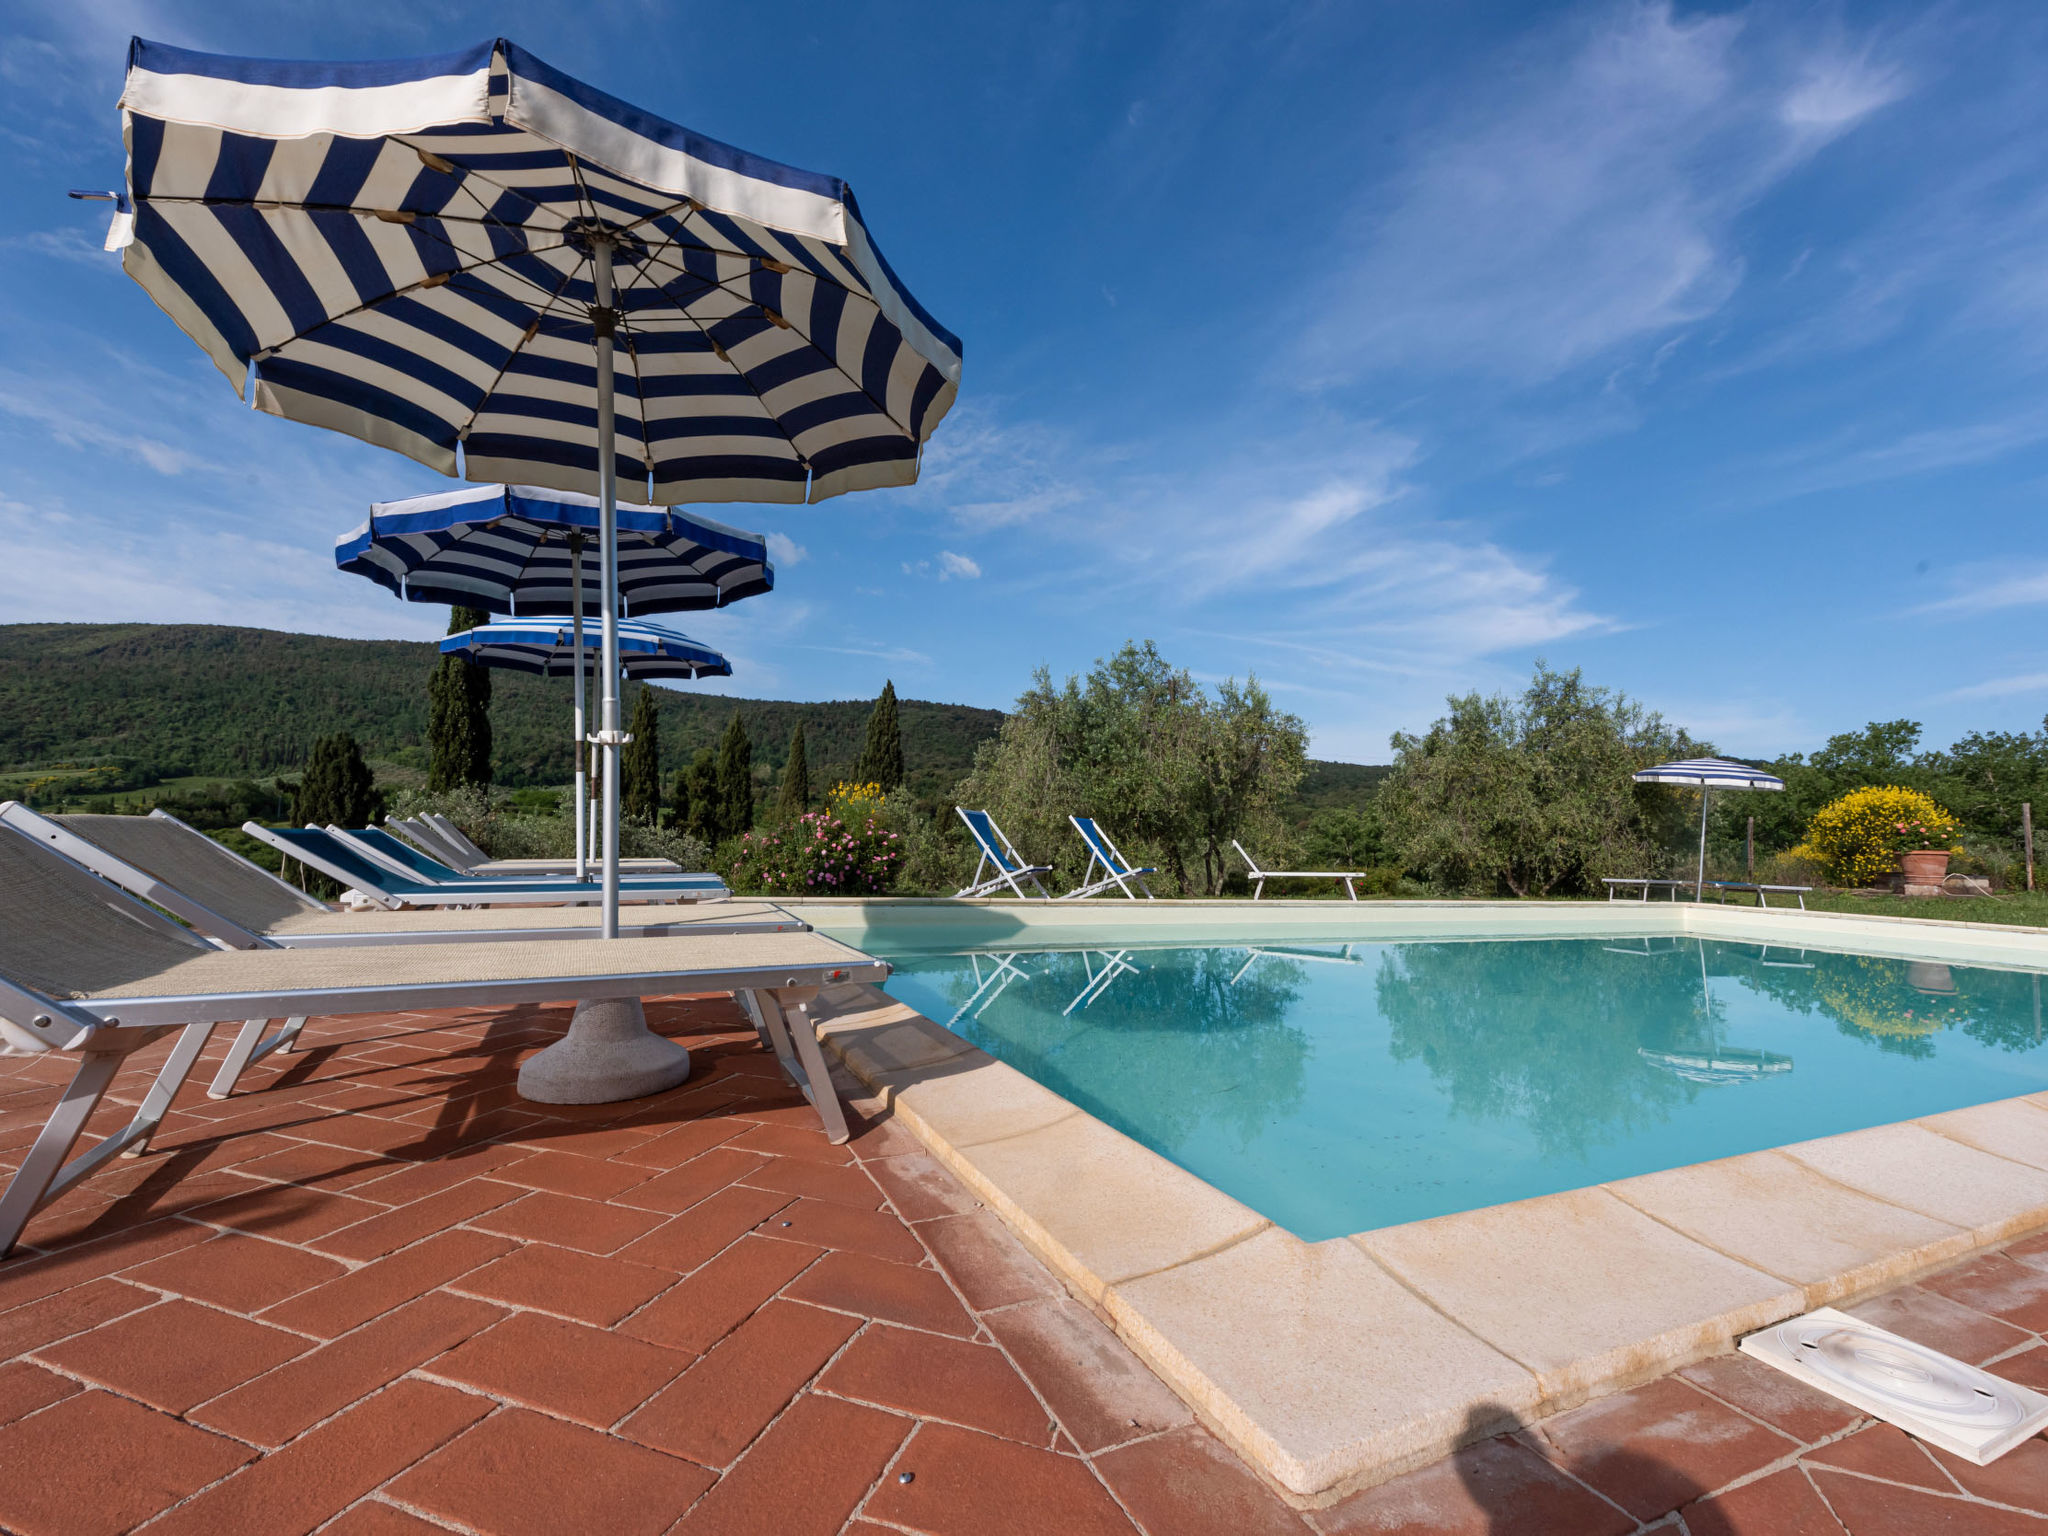 Foto 42 - Casa con 4 camere da letto a San Gimignano con piscina e giardino